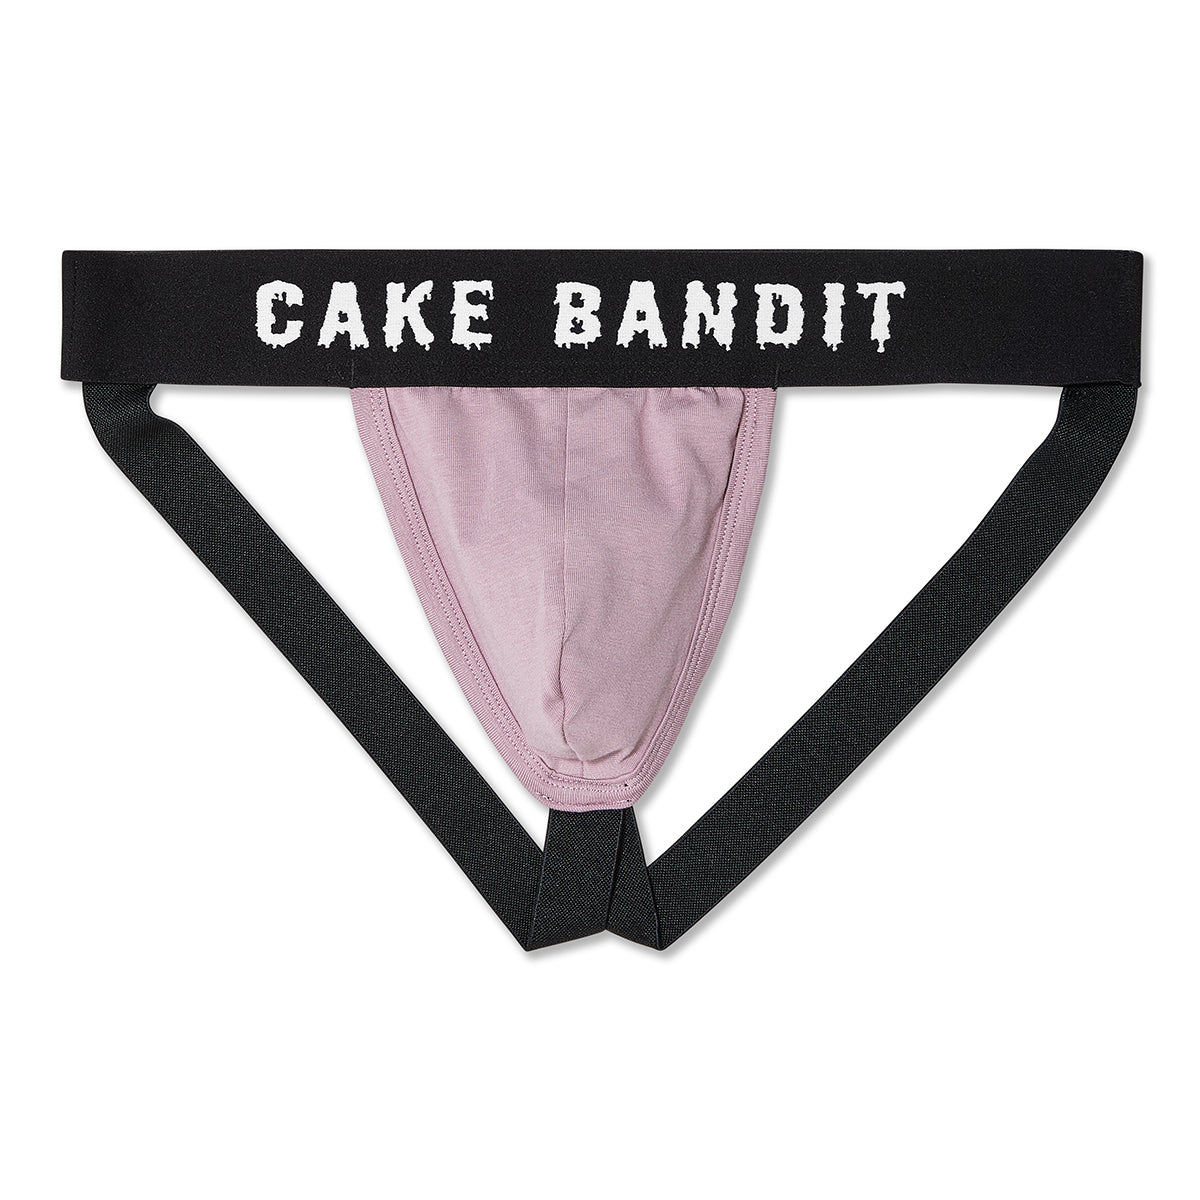 Cake Bandit Jockstrap – TG Supply